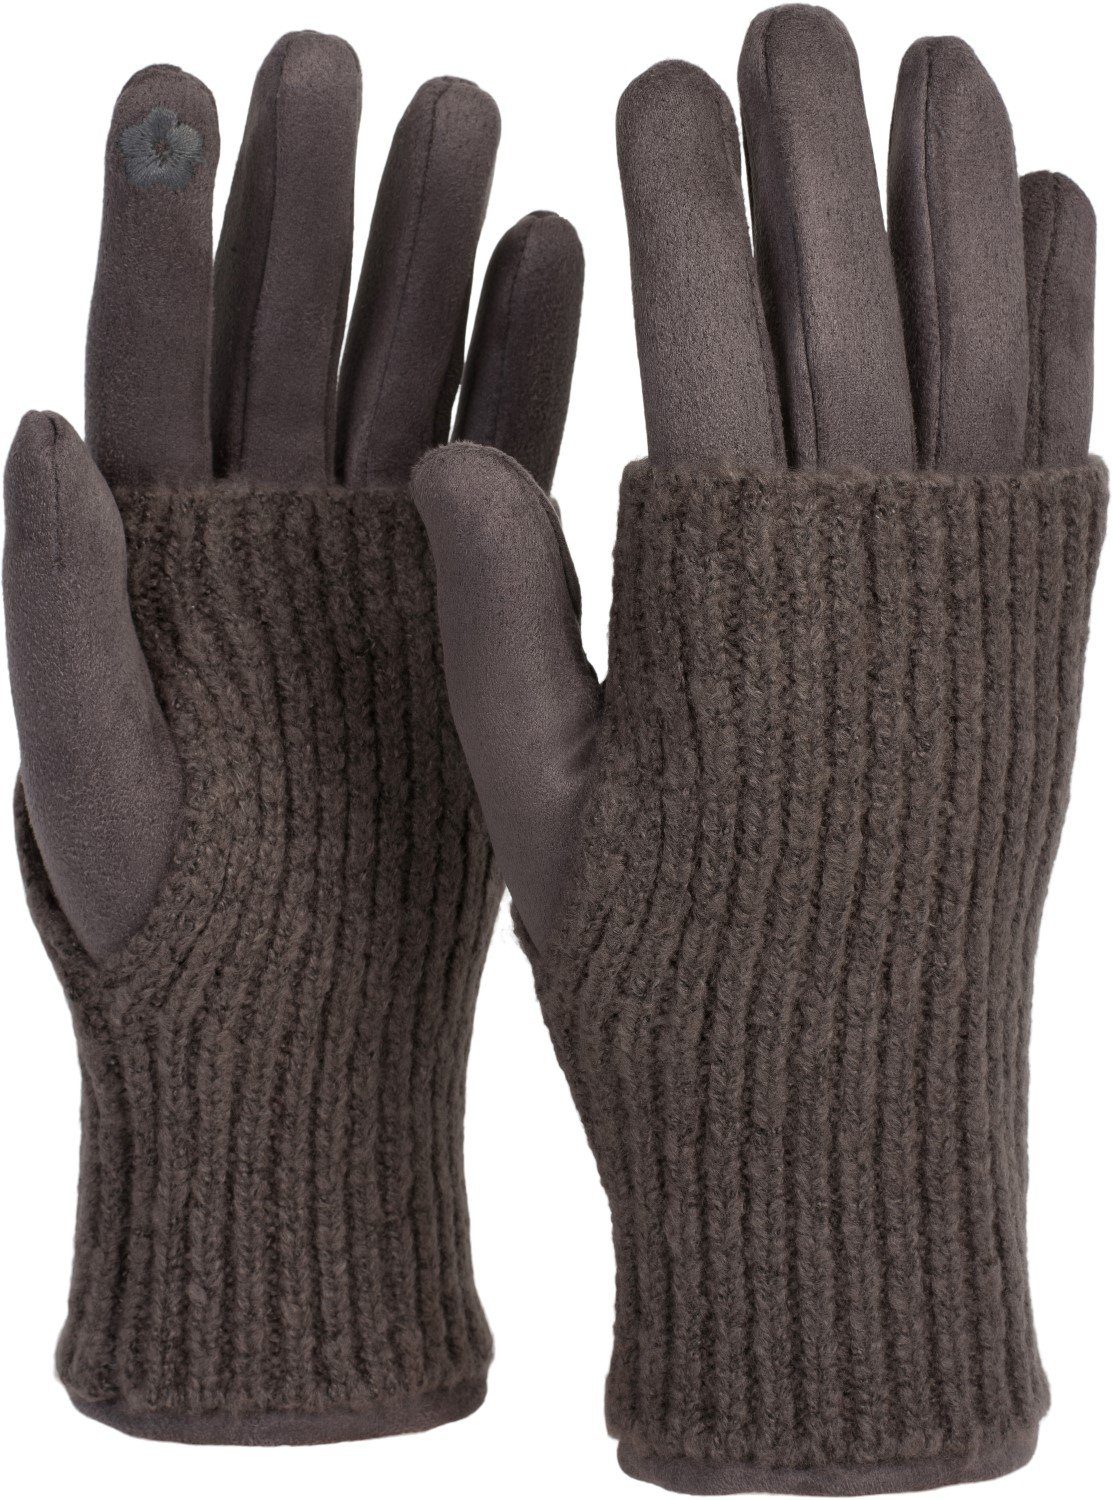 styleBREAKER Strickhandschuhe Touchscreen Stoff Handschuhe mit abnehmbarer Strick Manschette